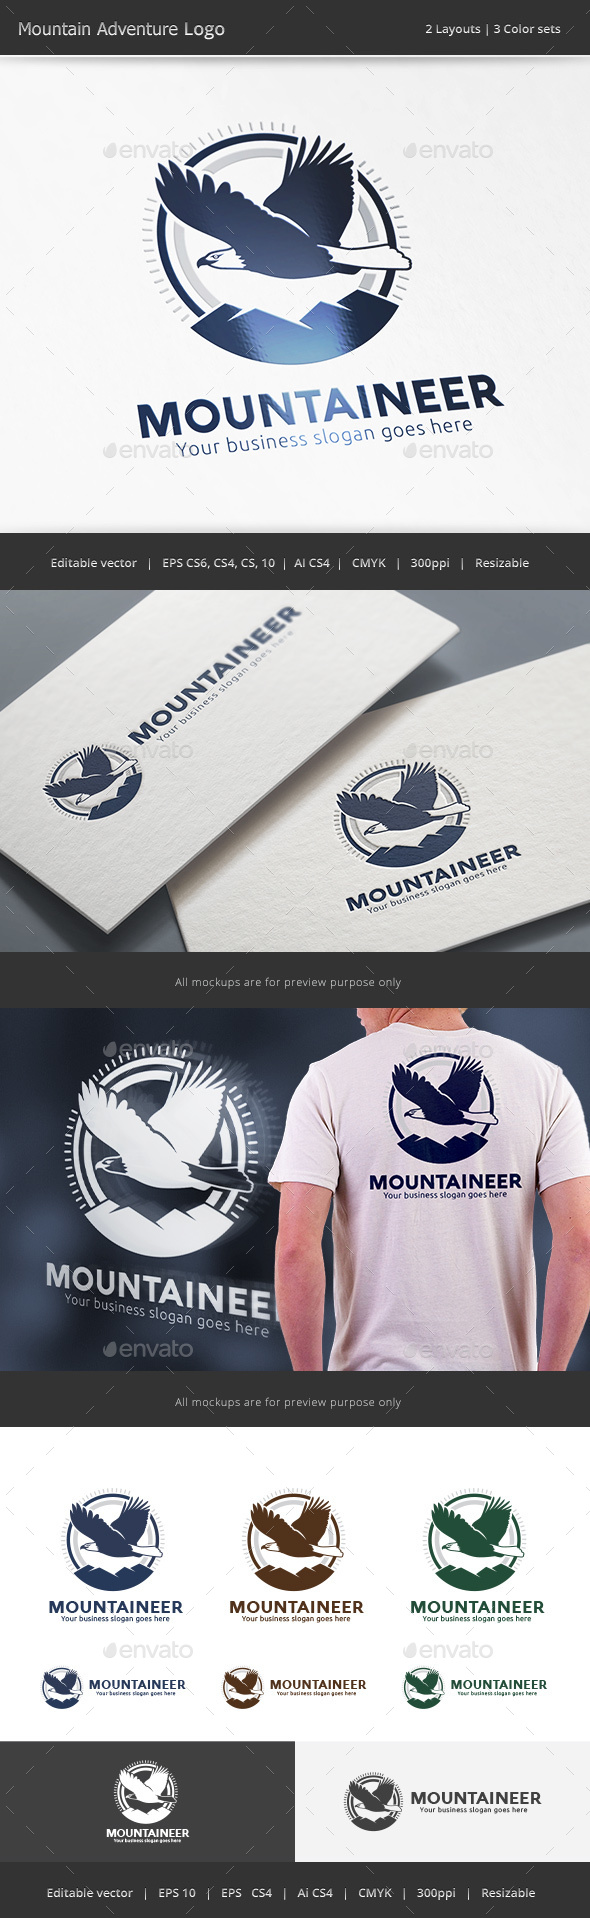 Eagle Mountain Adventure Logo